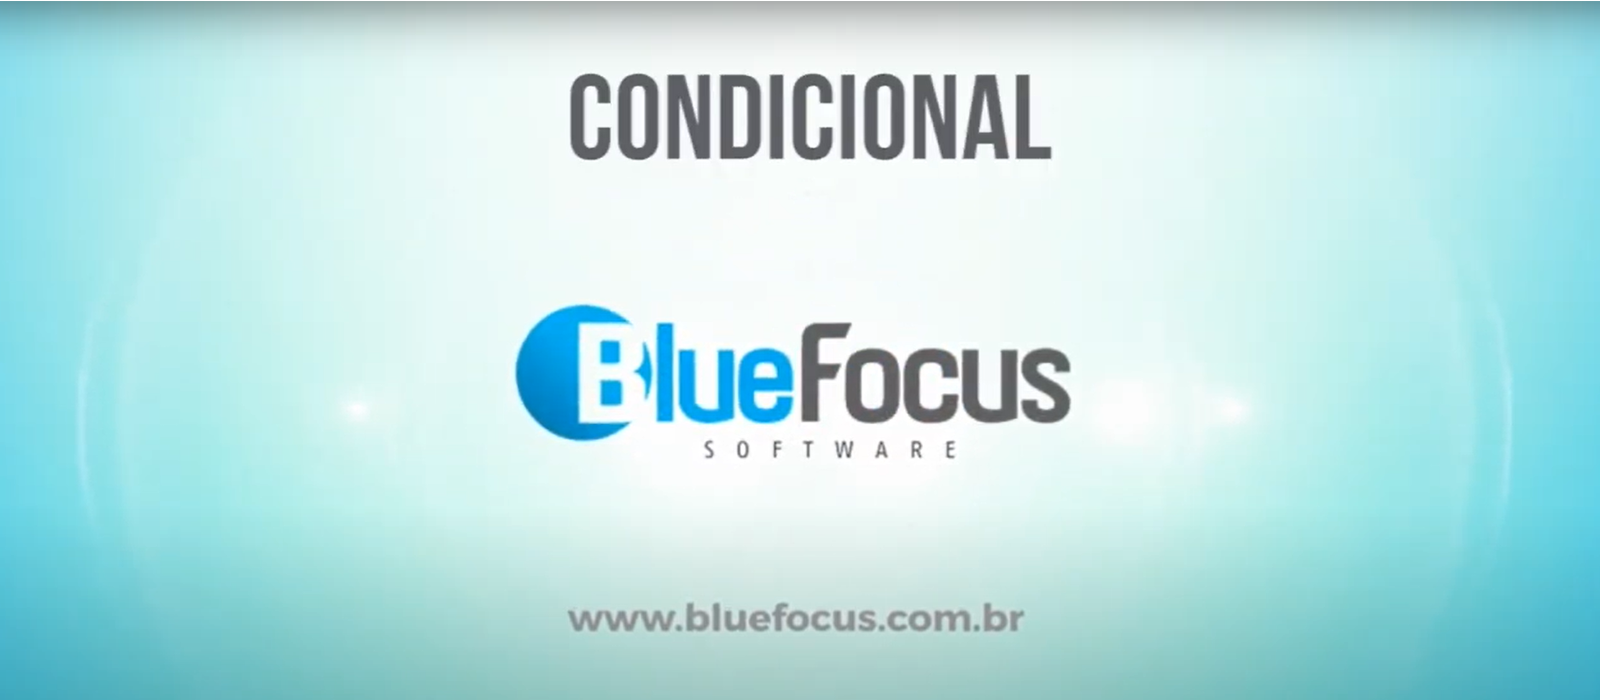 BlueFocus Software, sistema de gestao de empresas na nuvem, venda condicional